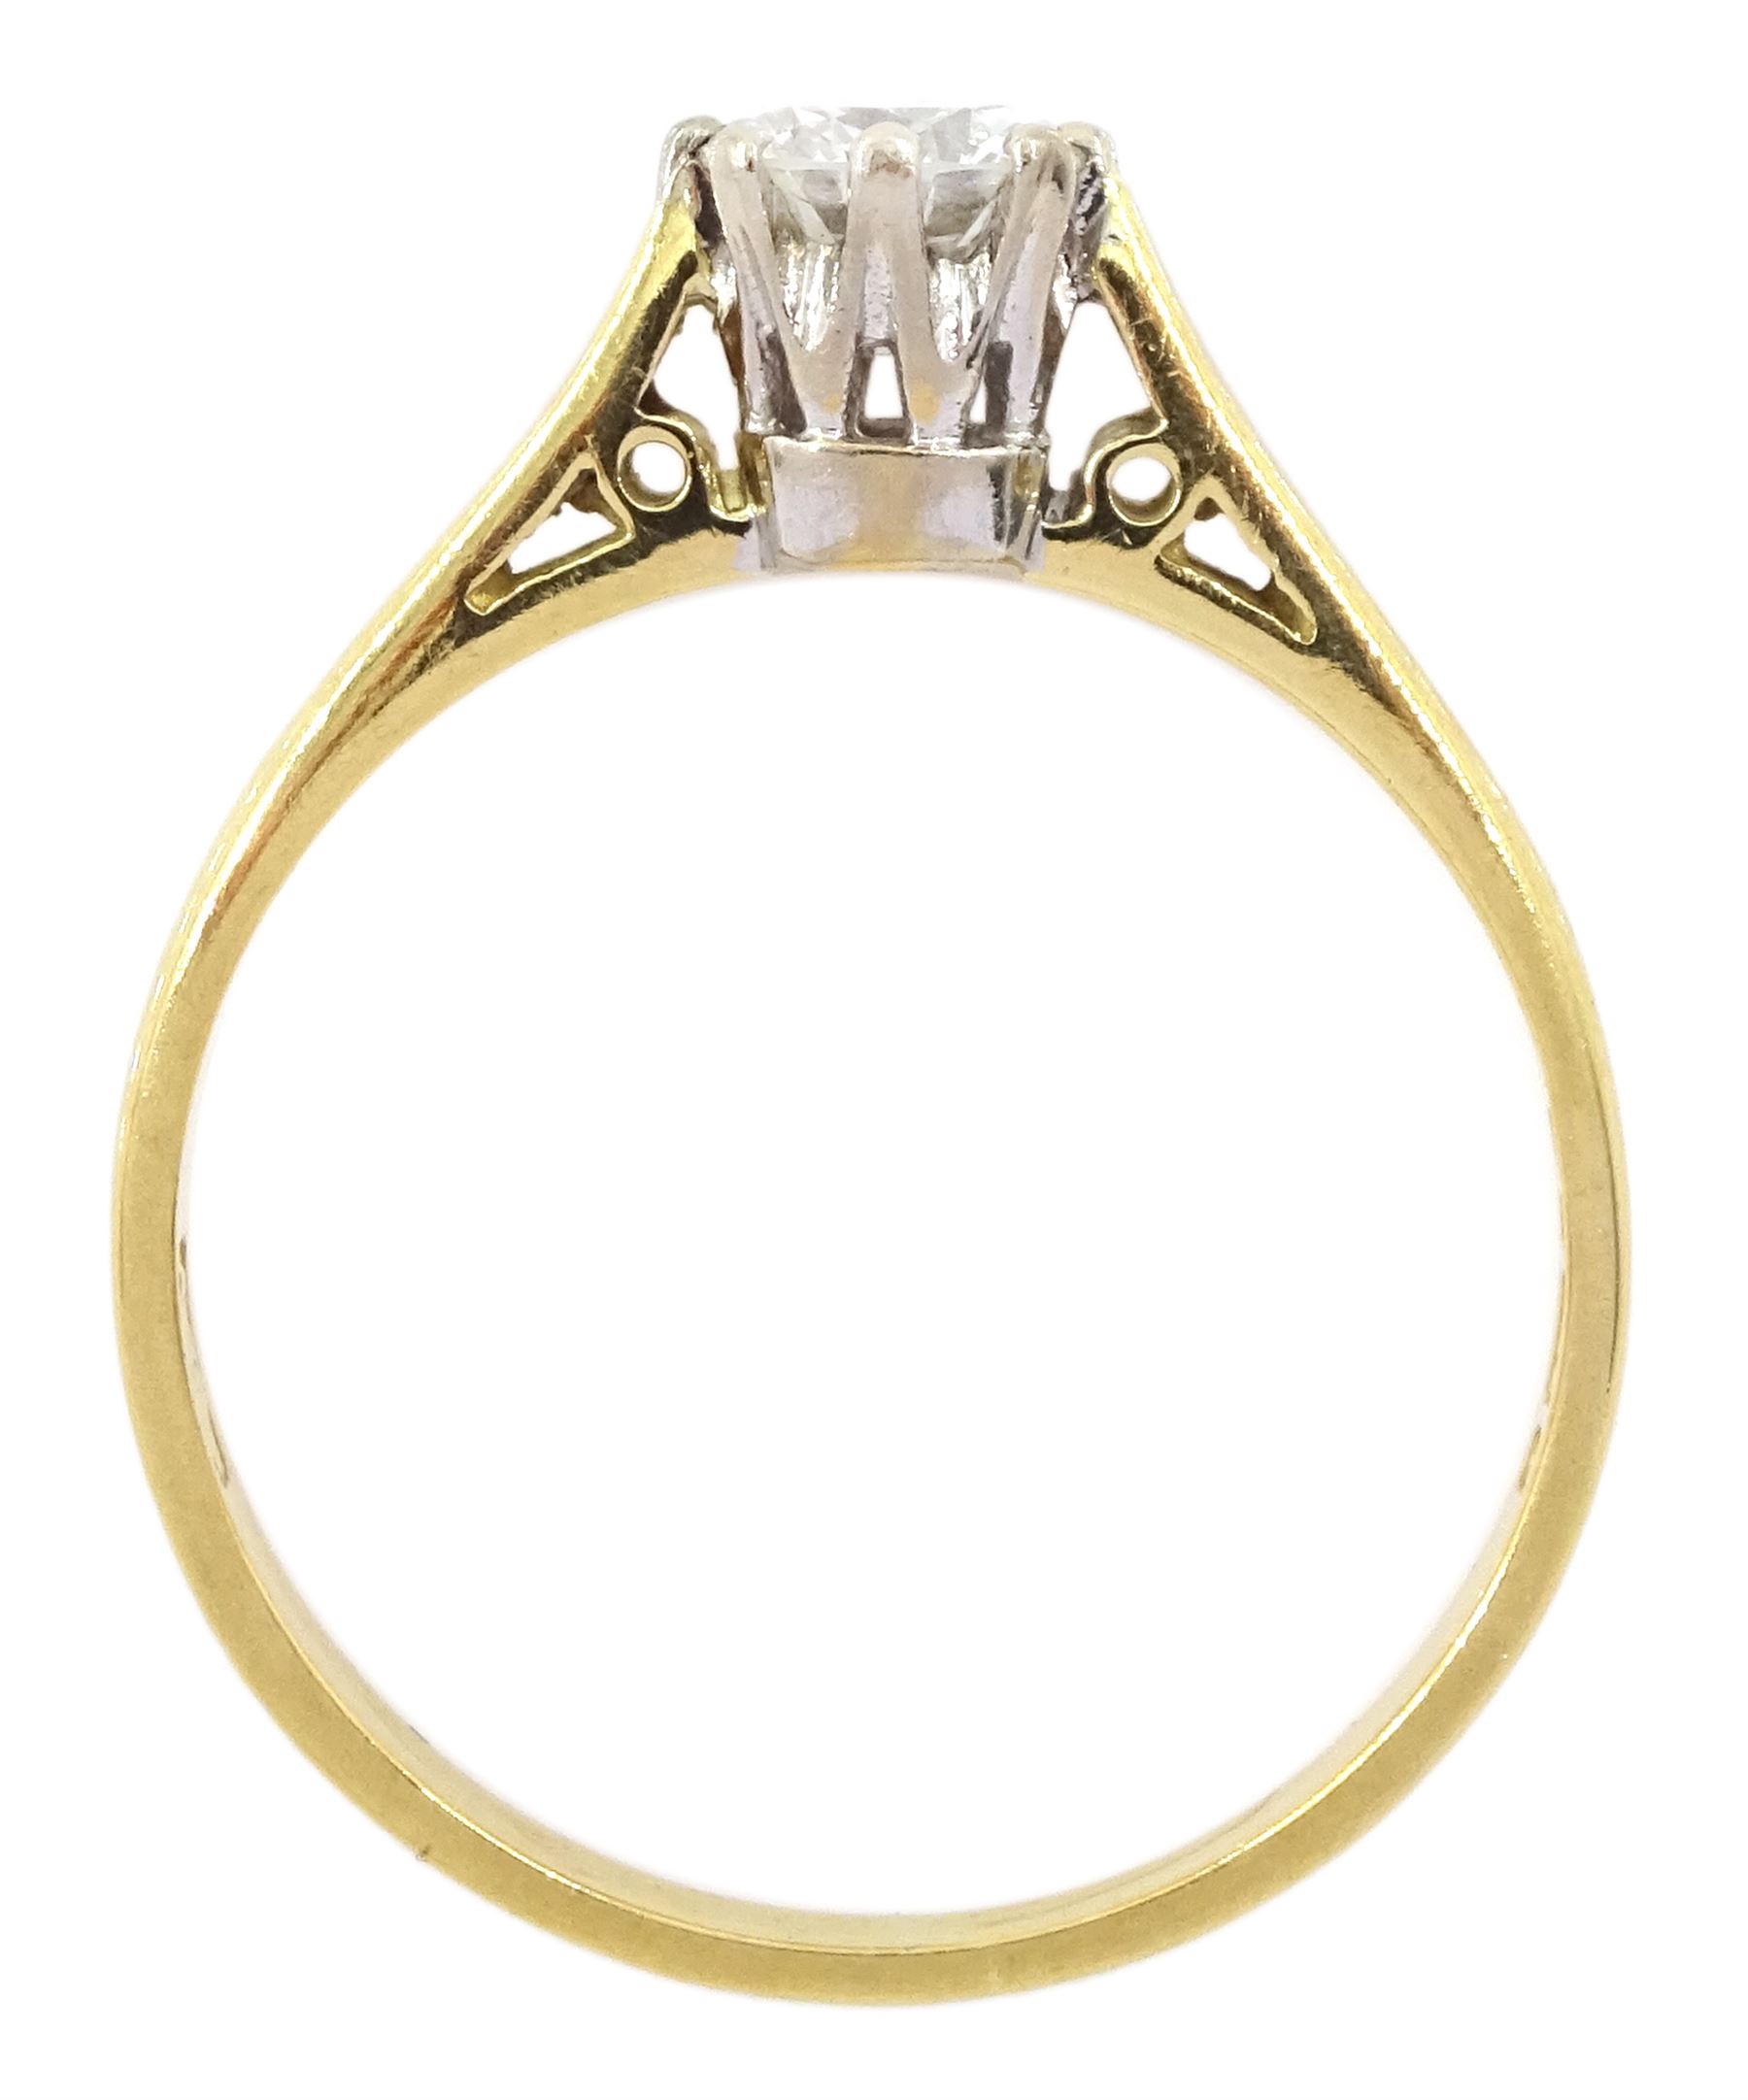 18ct gold single stone round brilliant cut diamond ring - Image 4 of 4